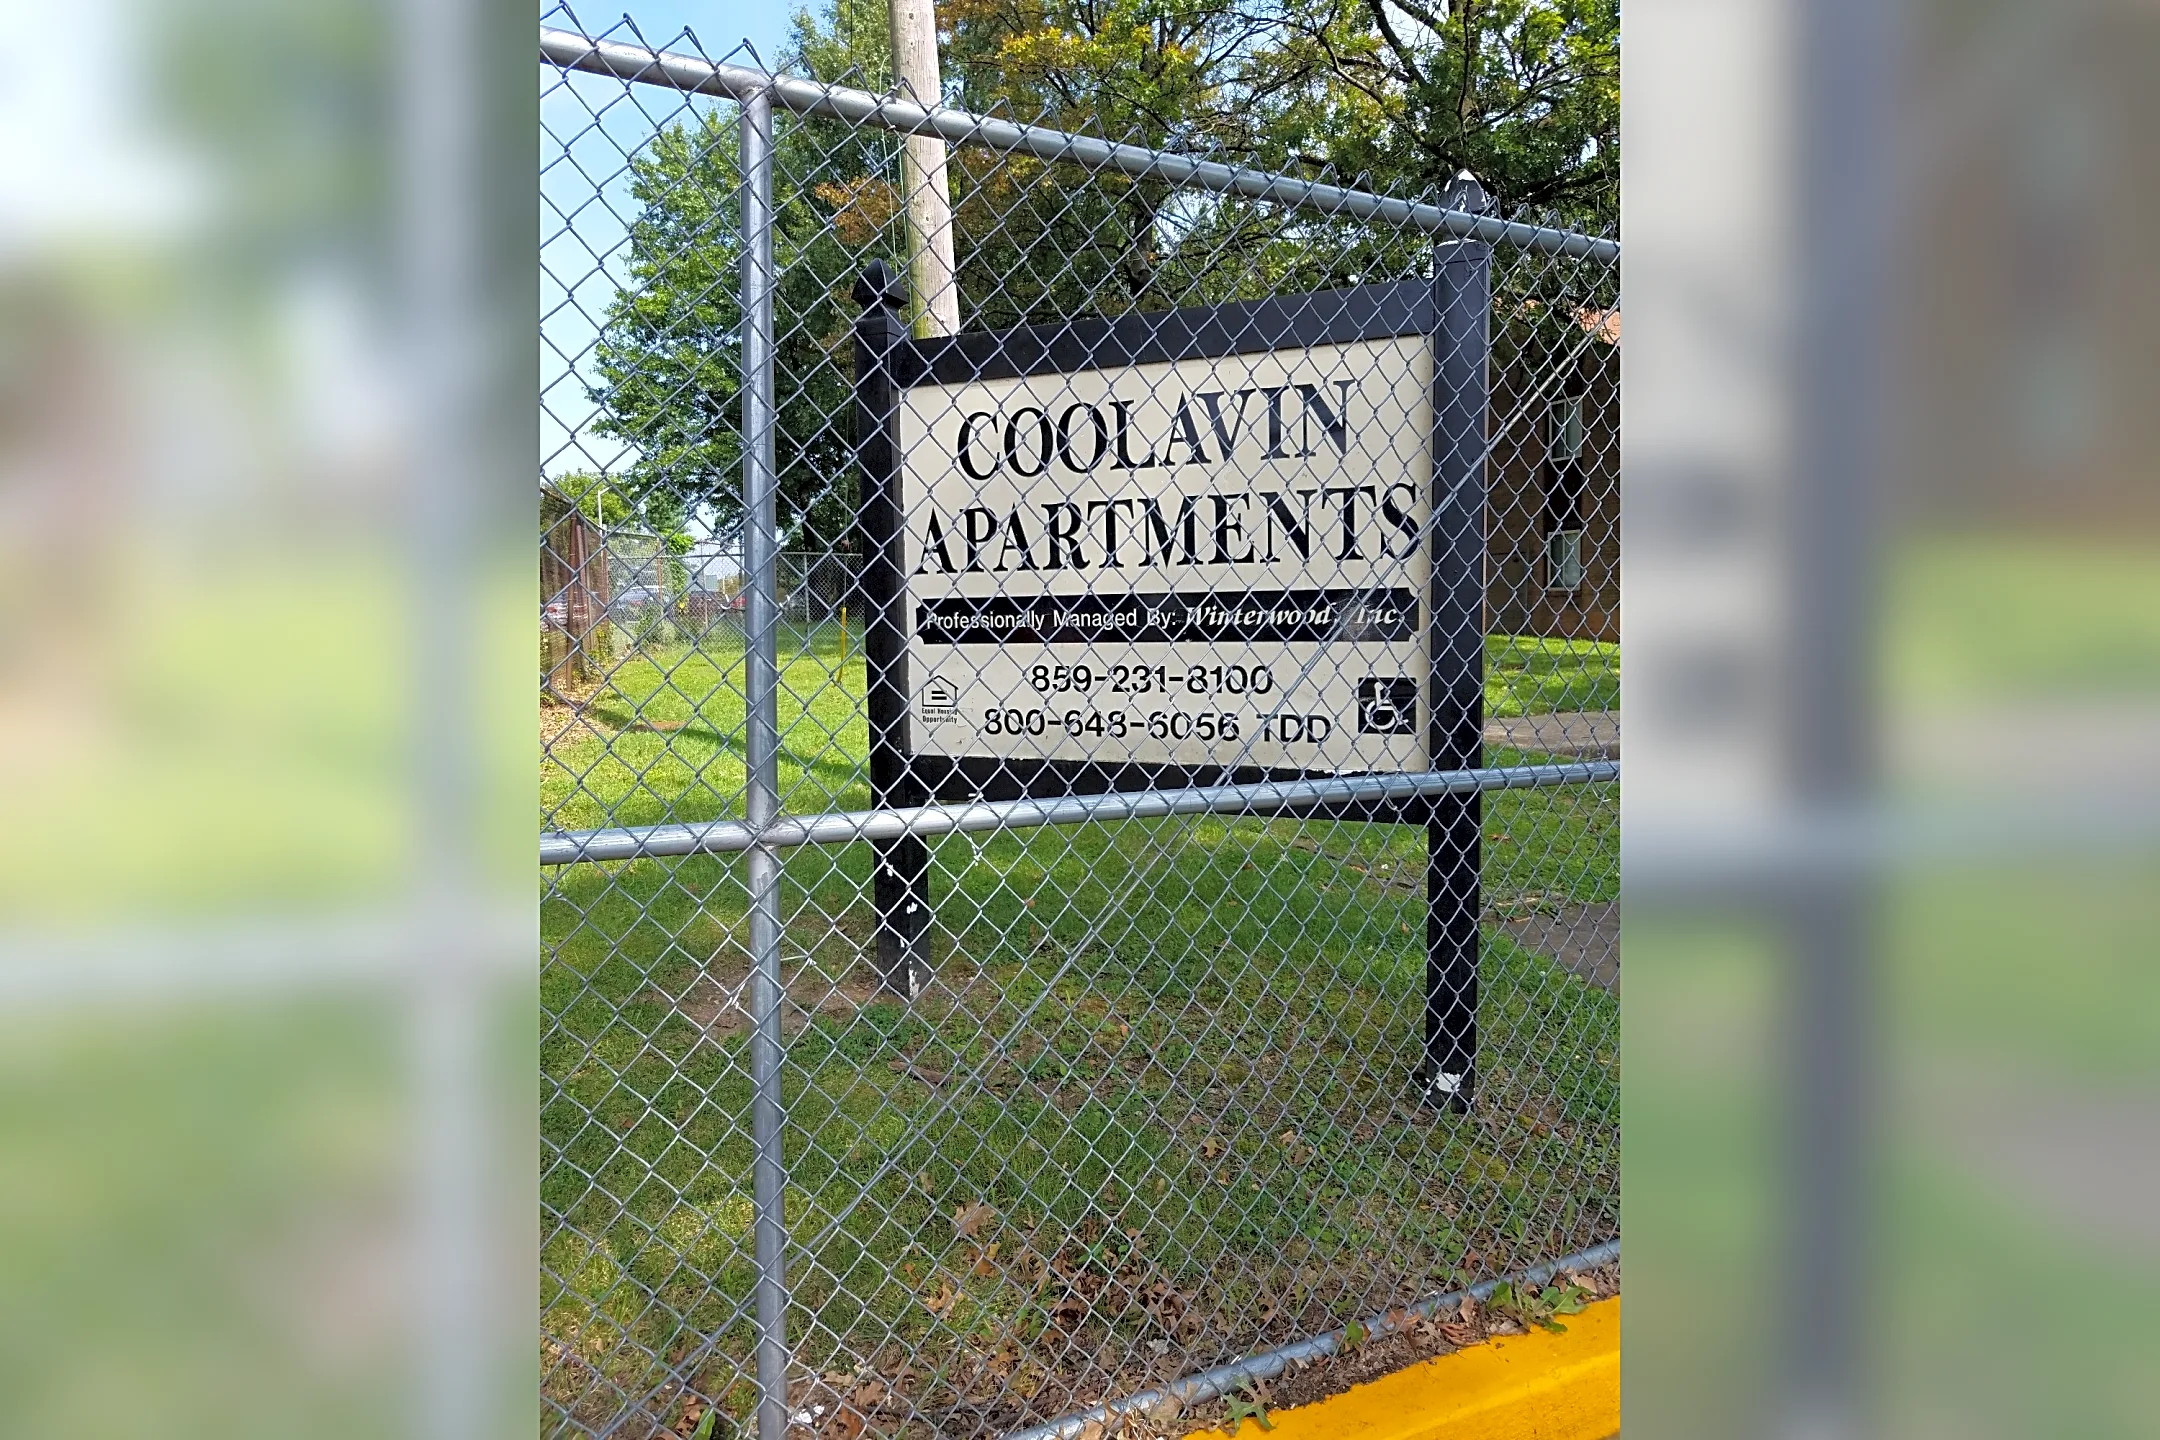 Pool - Coolavin Apartments - Lexington, KY